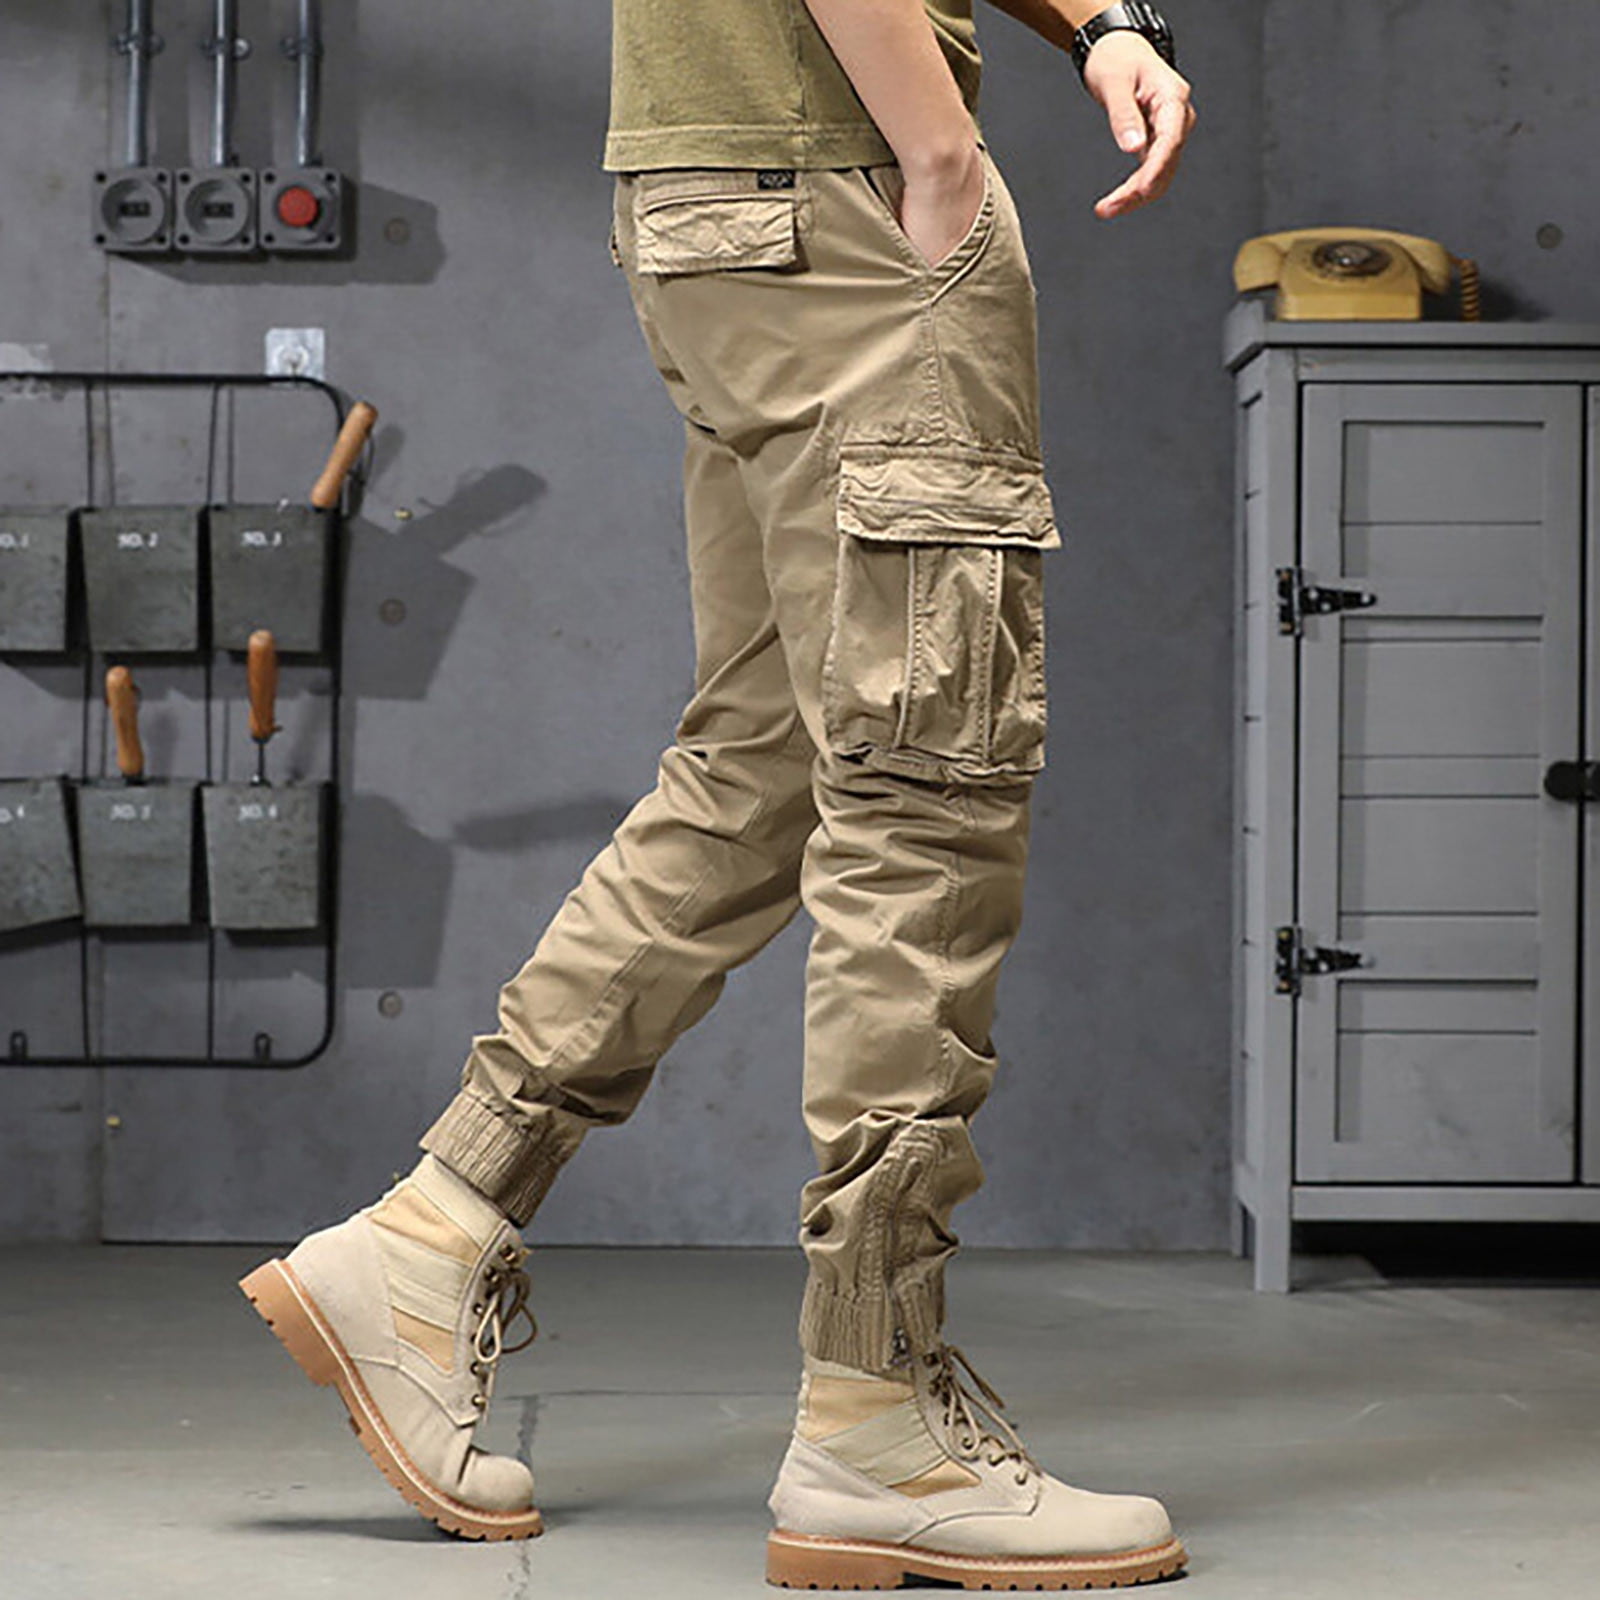 kpoplk Mens Cargo Joggers,Men's Drawstring Sweatpants Elastic Waist Solid  Color Loose Trousers with Pocket Cargo Casual Pants(Khaki,3XL)